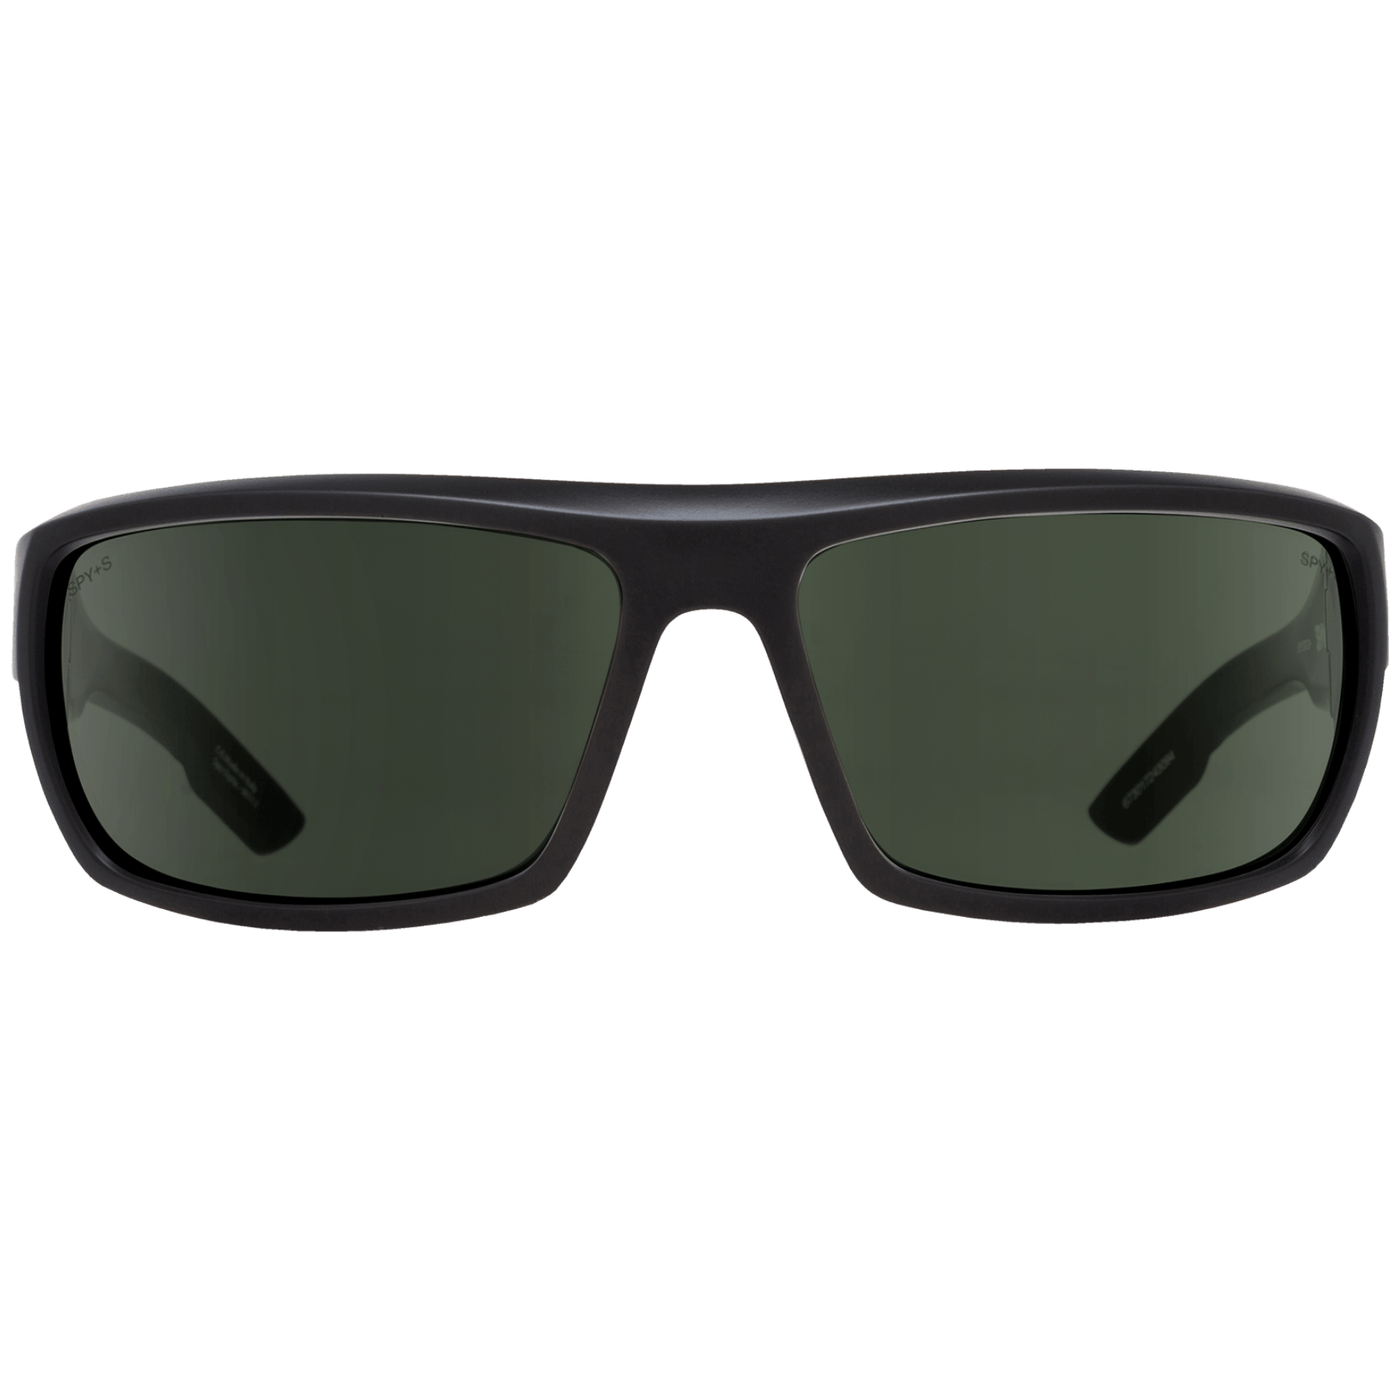 SPY BOUNTY Polarized ANSI Certified Sunglasses - Matte Black 8Lines Shop - Fast Shipping